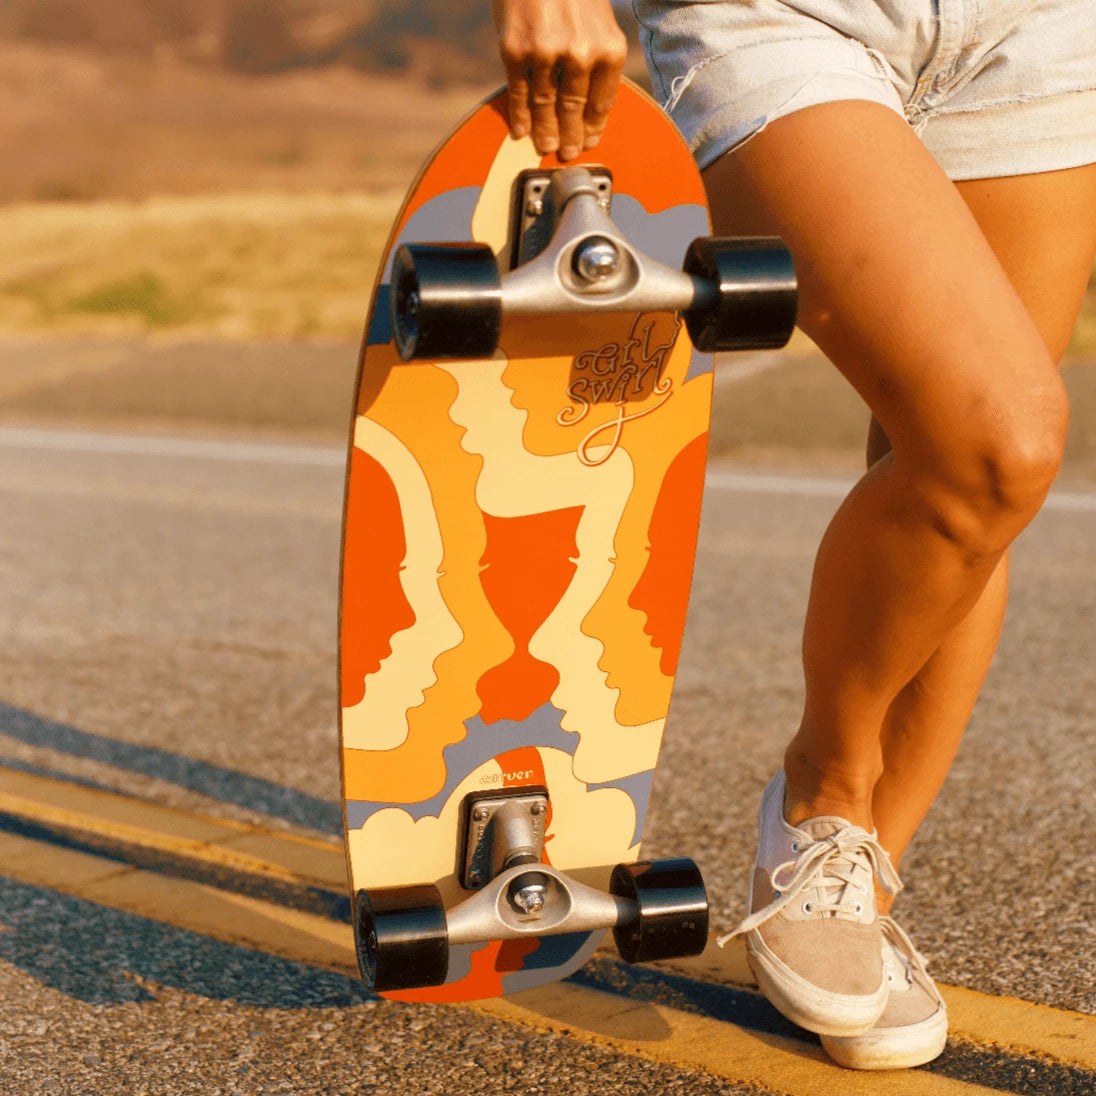 The Original GRLSWIRL x Carver Skateboard